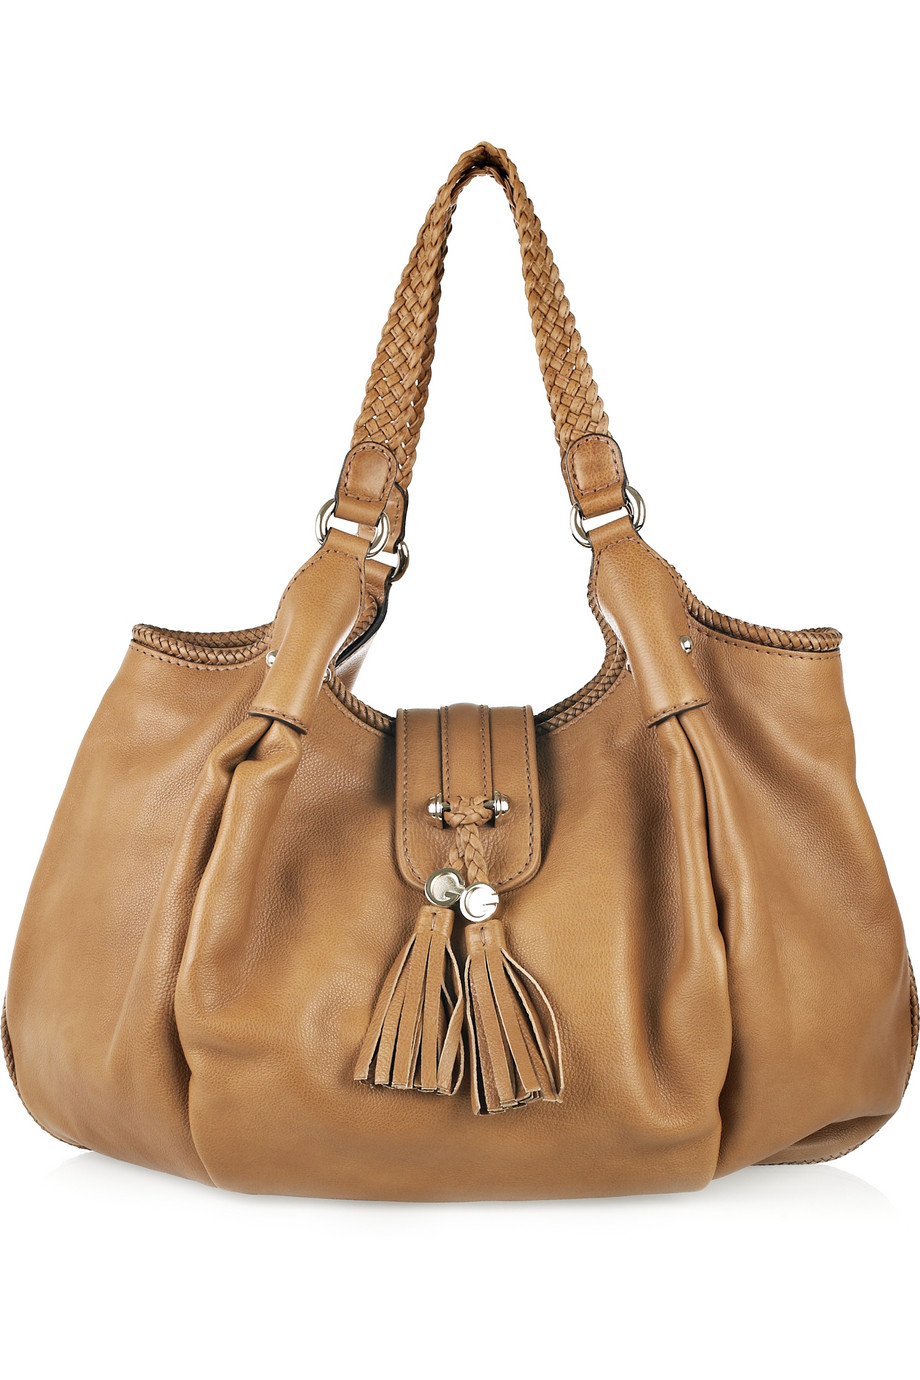 Gucci Marrakech Medium Leather Shoulder Bag in Brown | Lyst